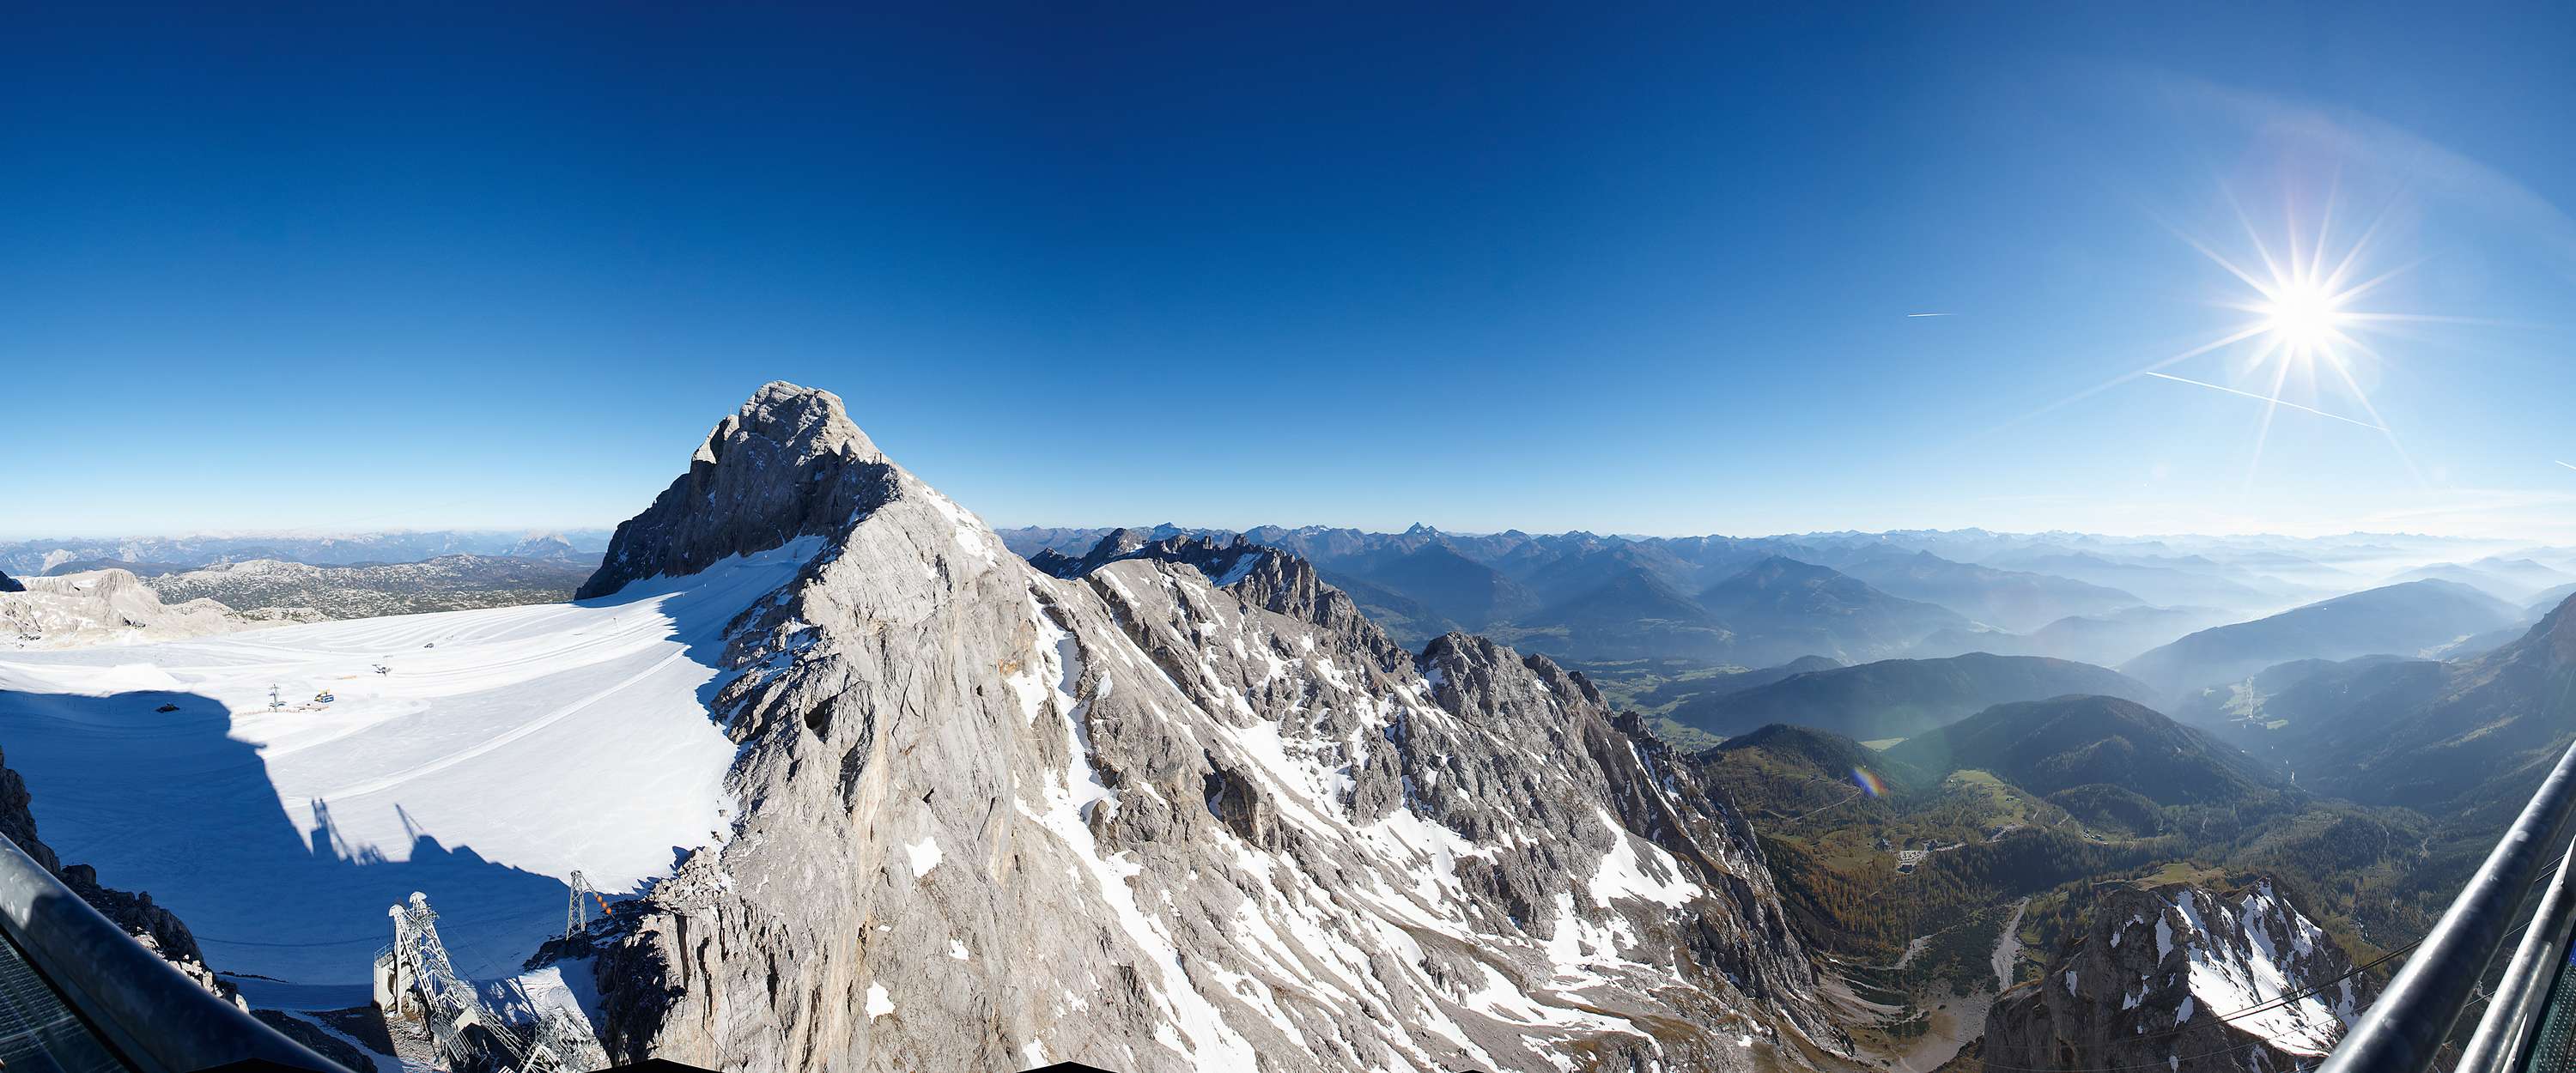             Mountain peak - photo wallpaper with mountain panorama & sky
        